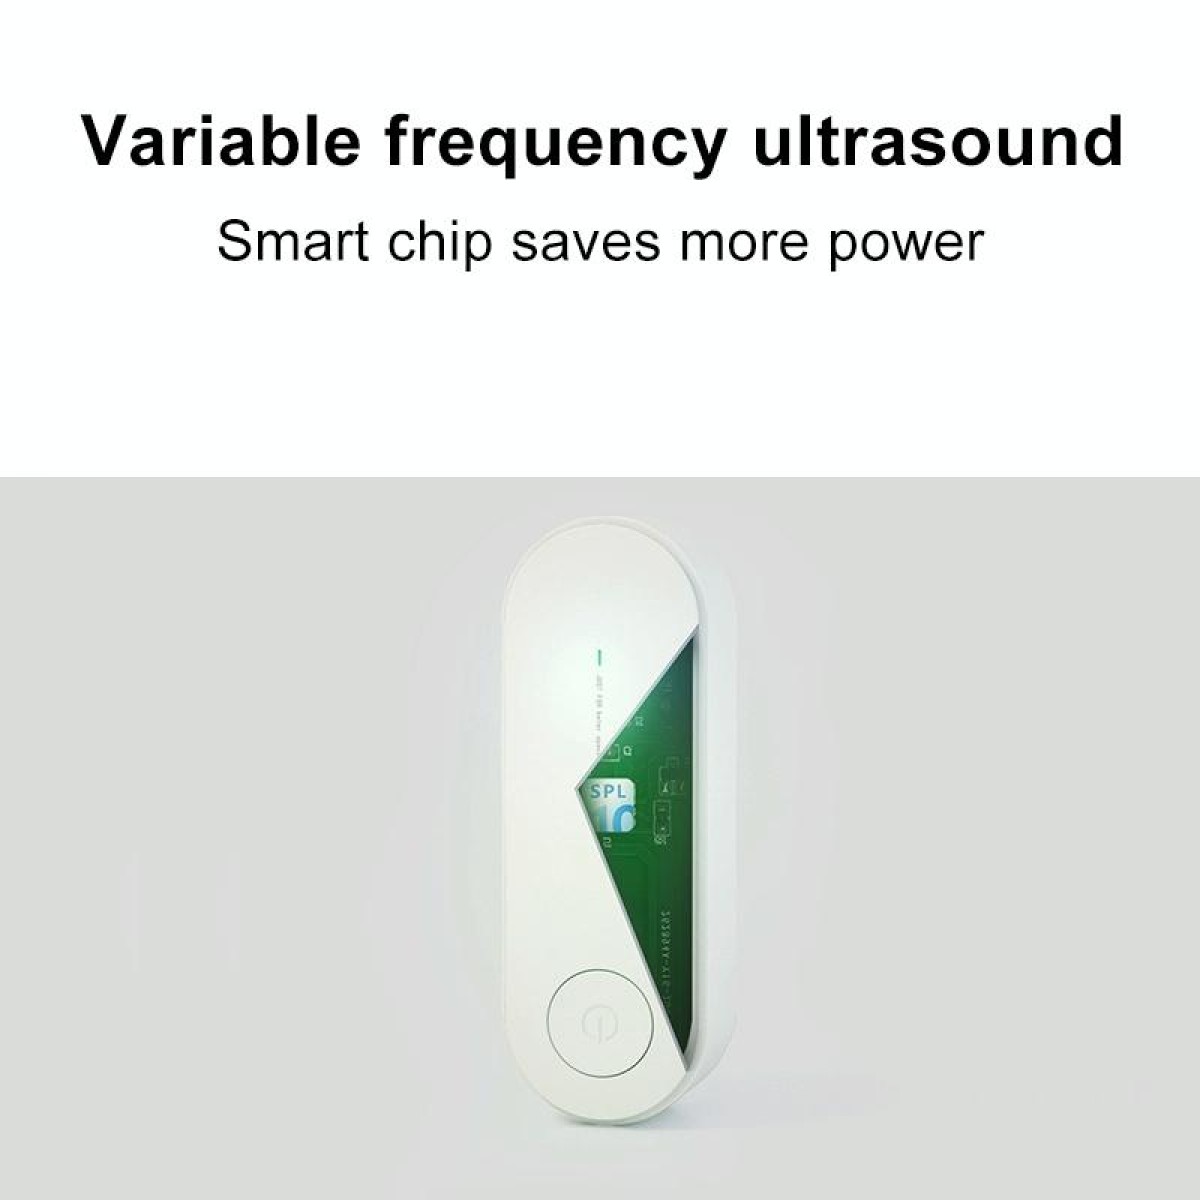 Mini Household Wireless Ultrasonic Deodorizer Vacuum Cleaner Dust Mite Controller, US Plug(Pink)